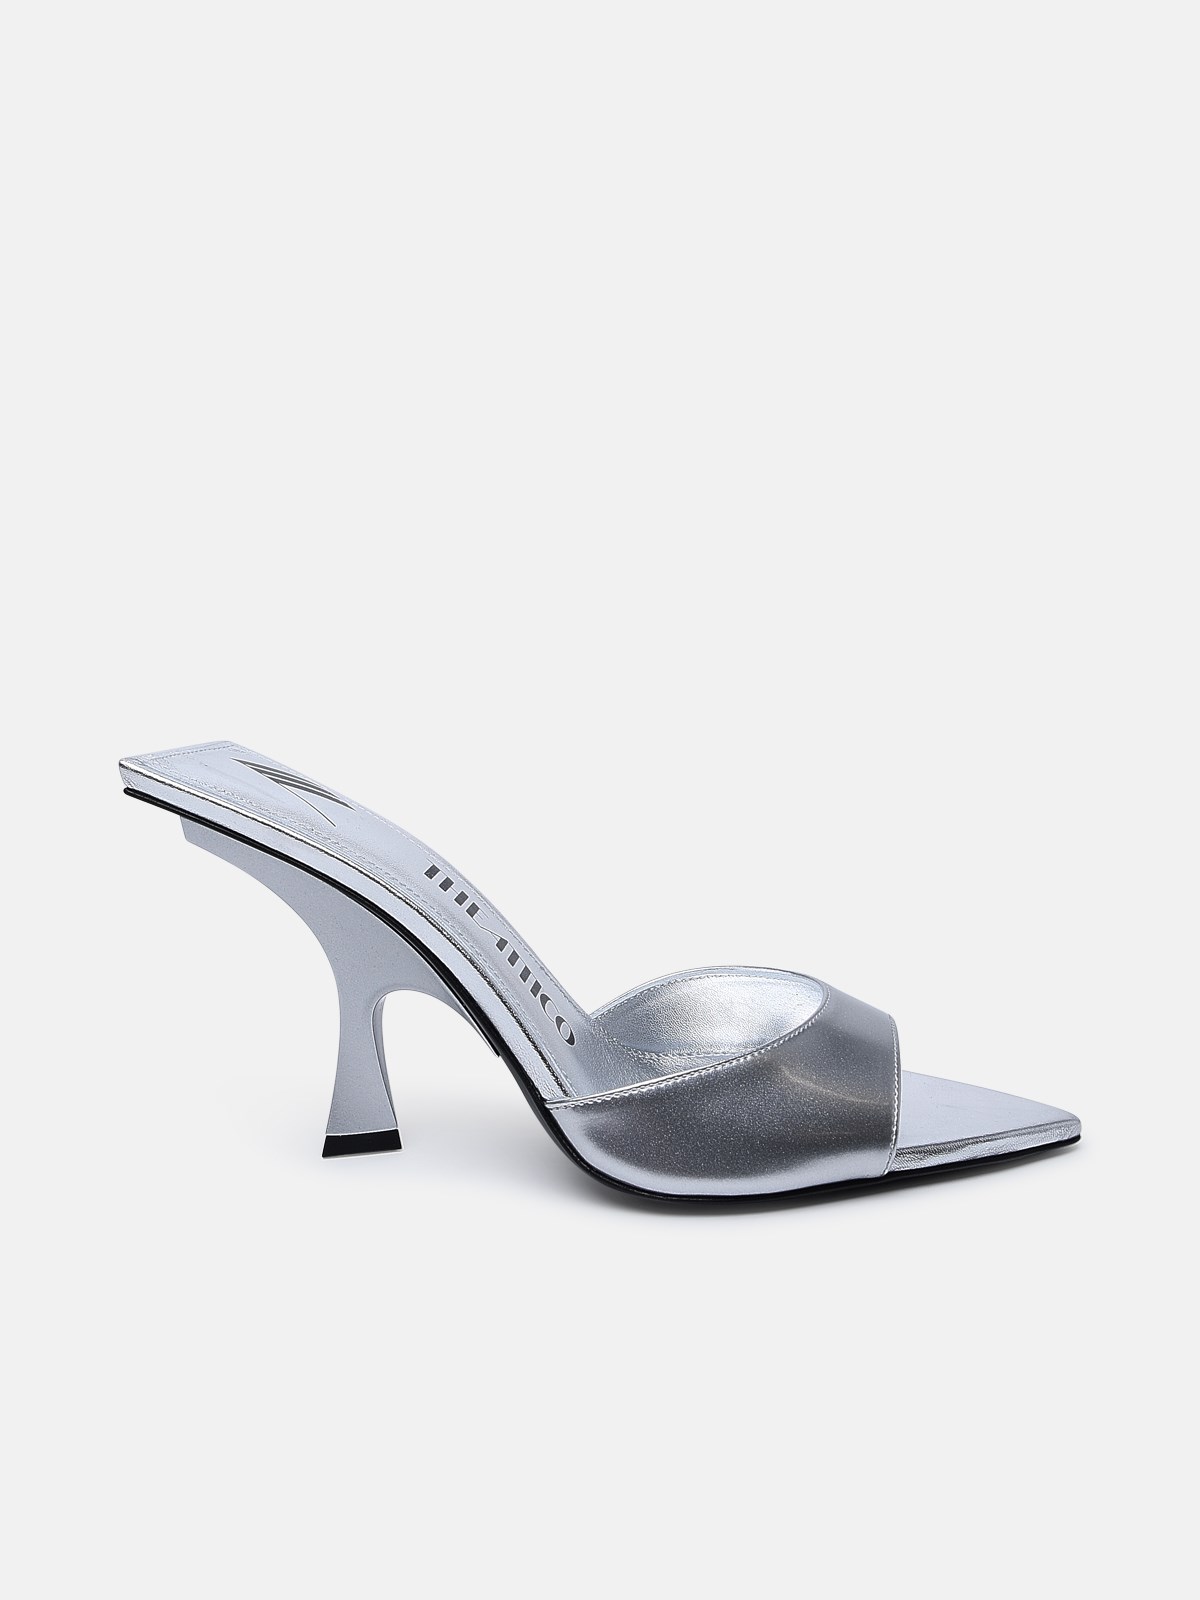 Attico Silver Shiny Leather Slippers